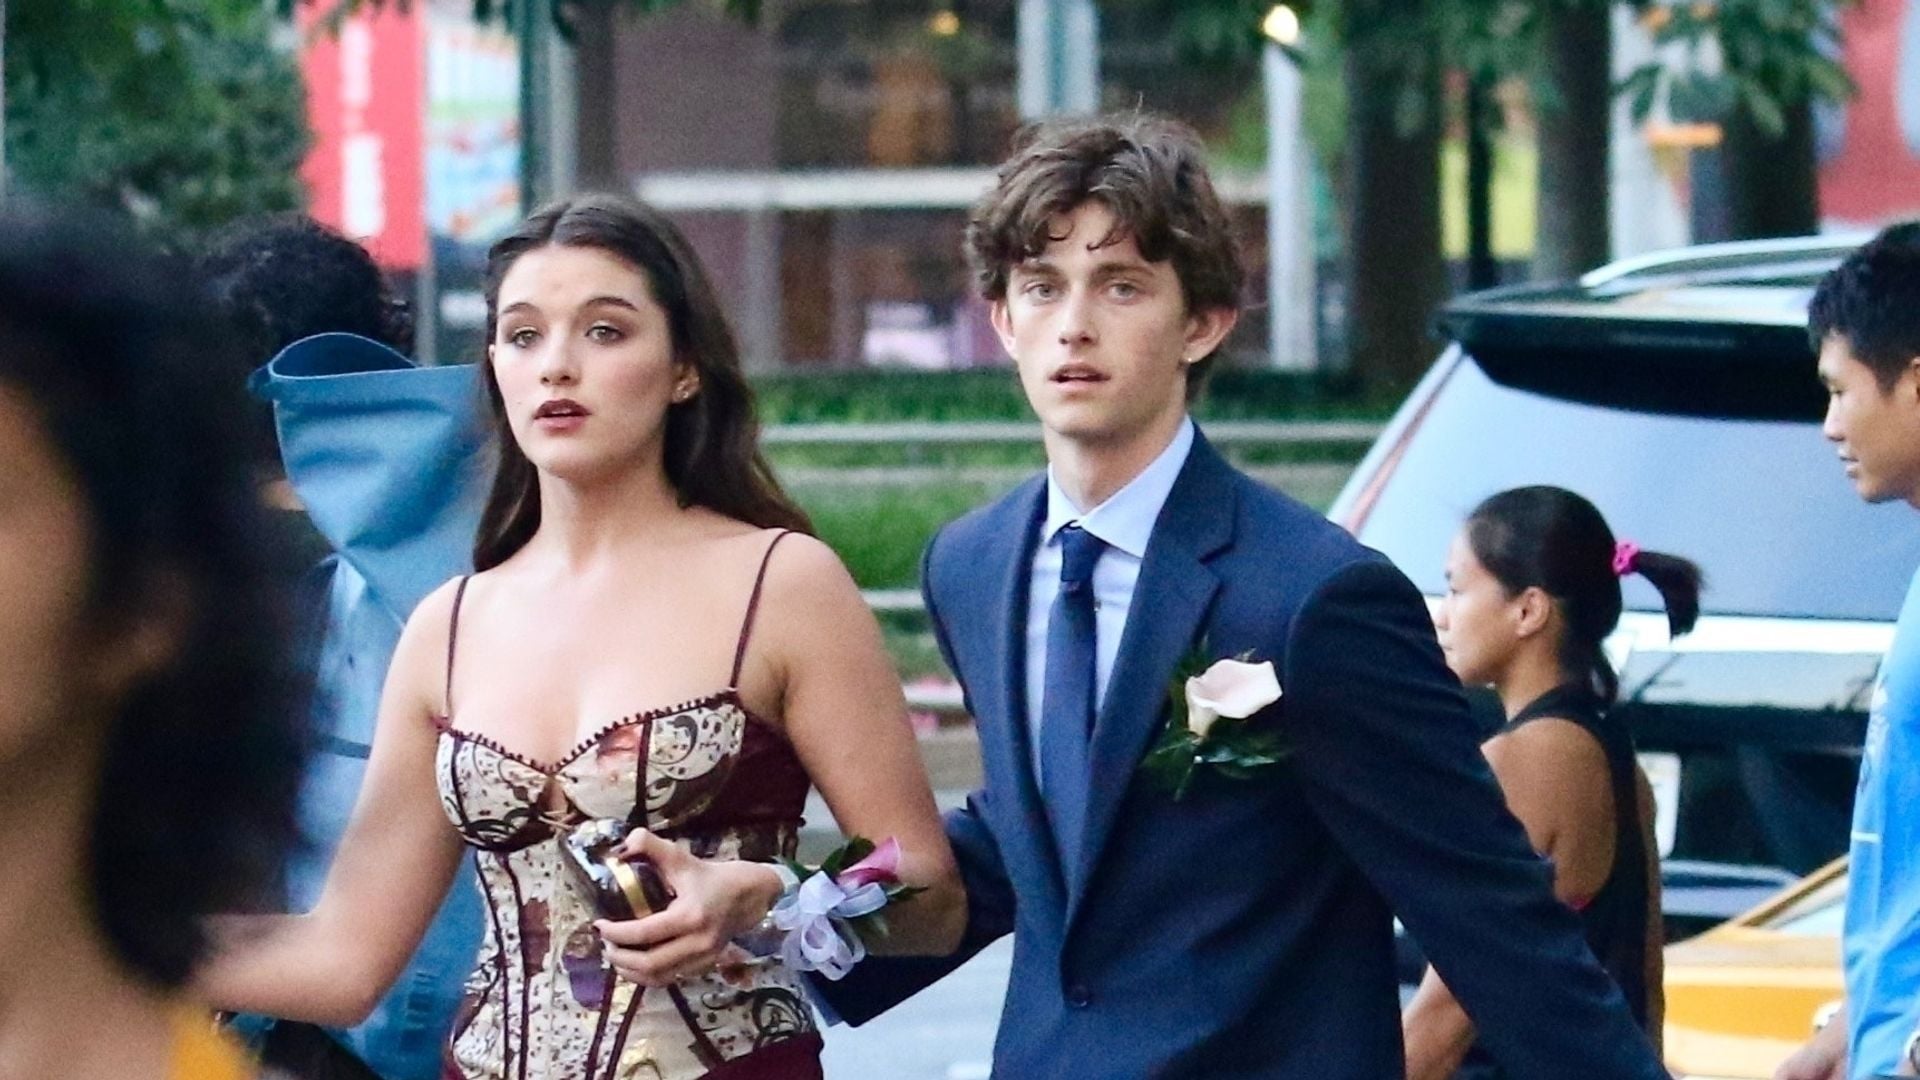 Meet Suri Cruise's prom date and rumored boyfriend, Toby Cohen